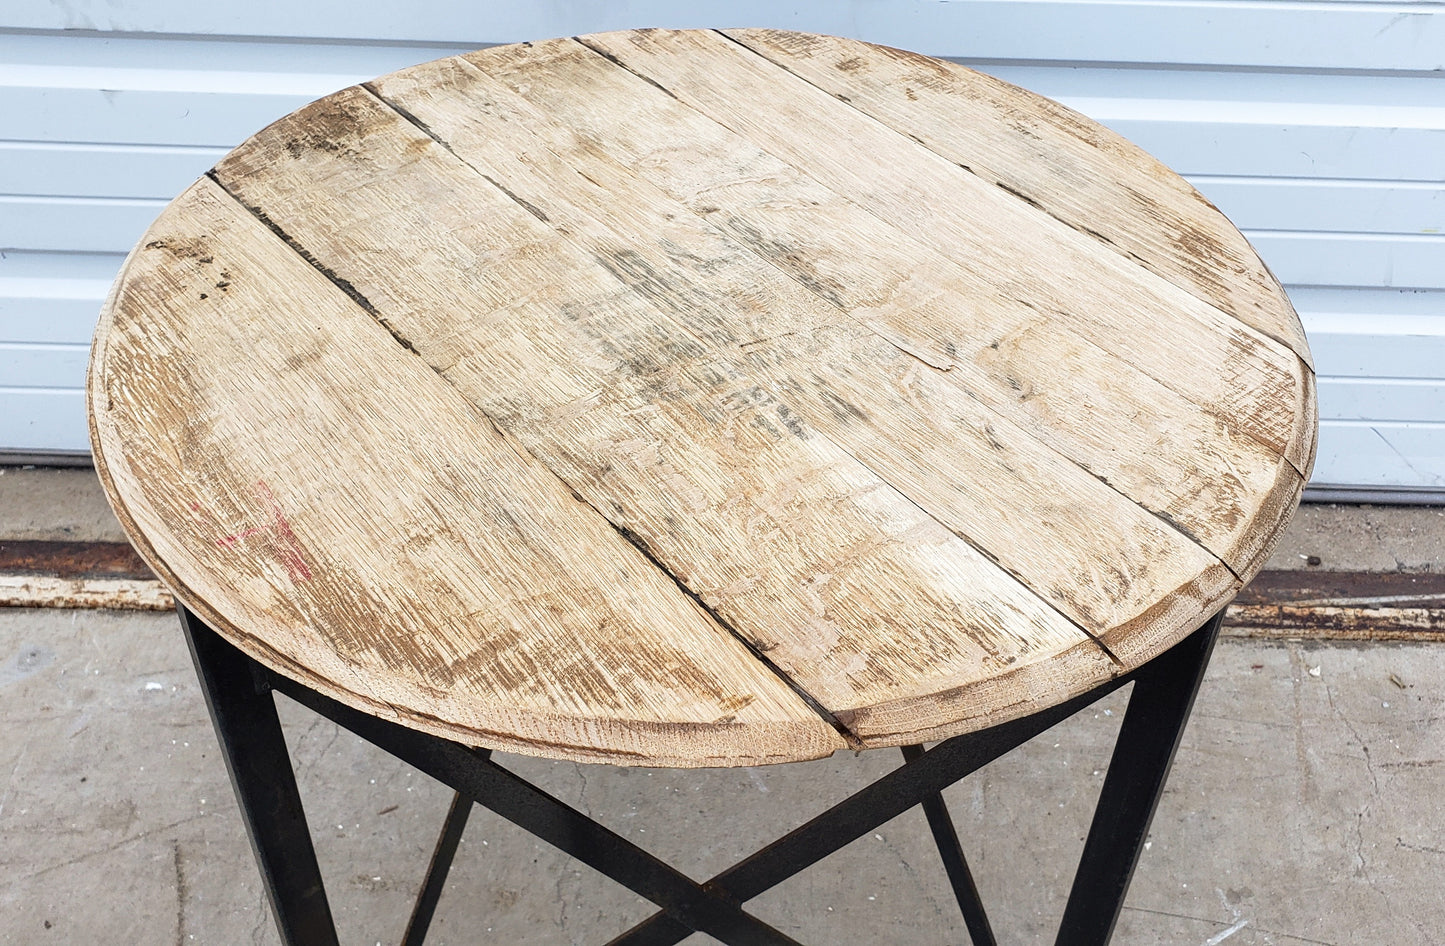 Repurposed Whiskey Barrel Side Table